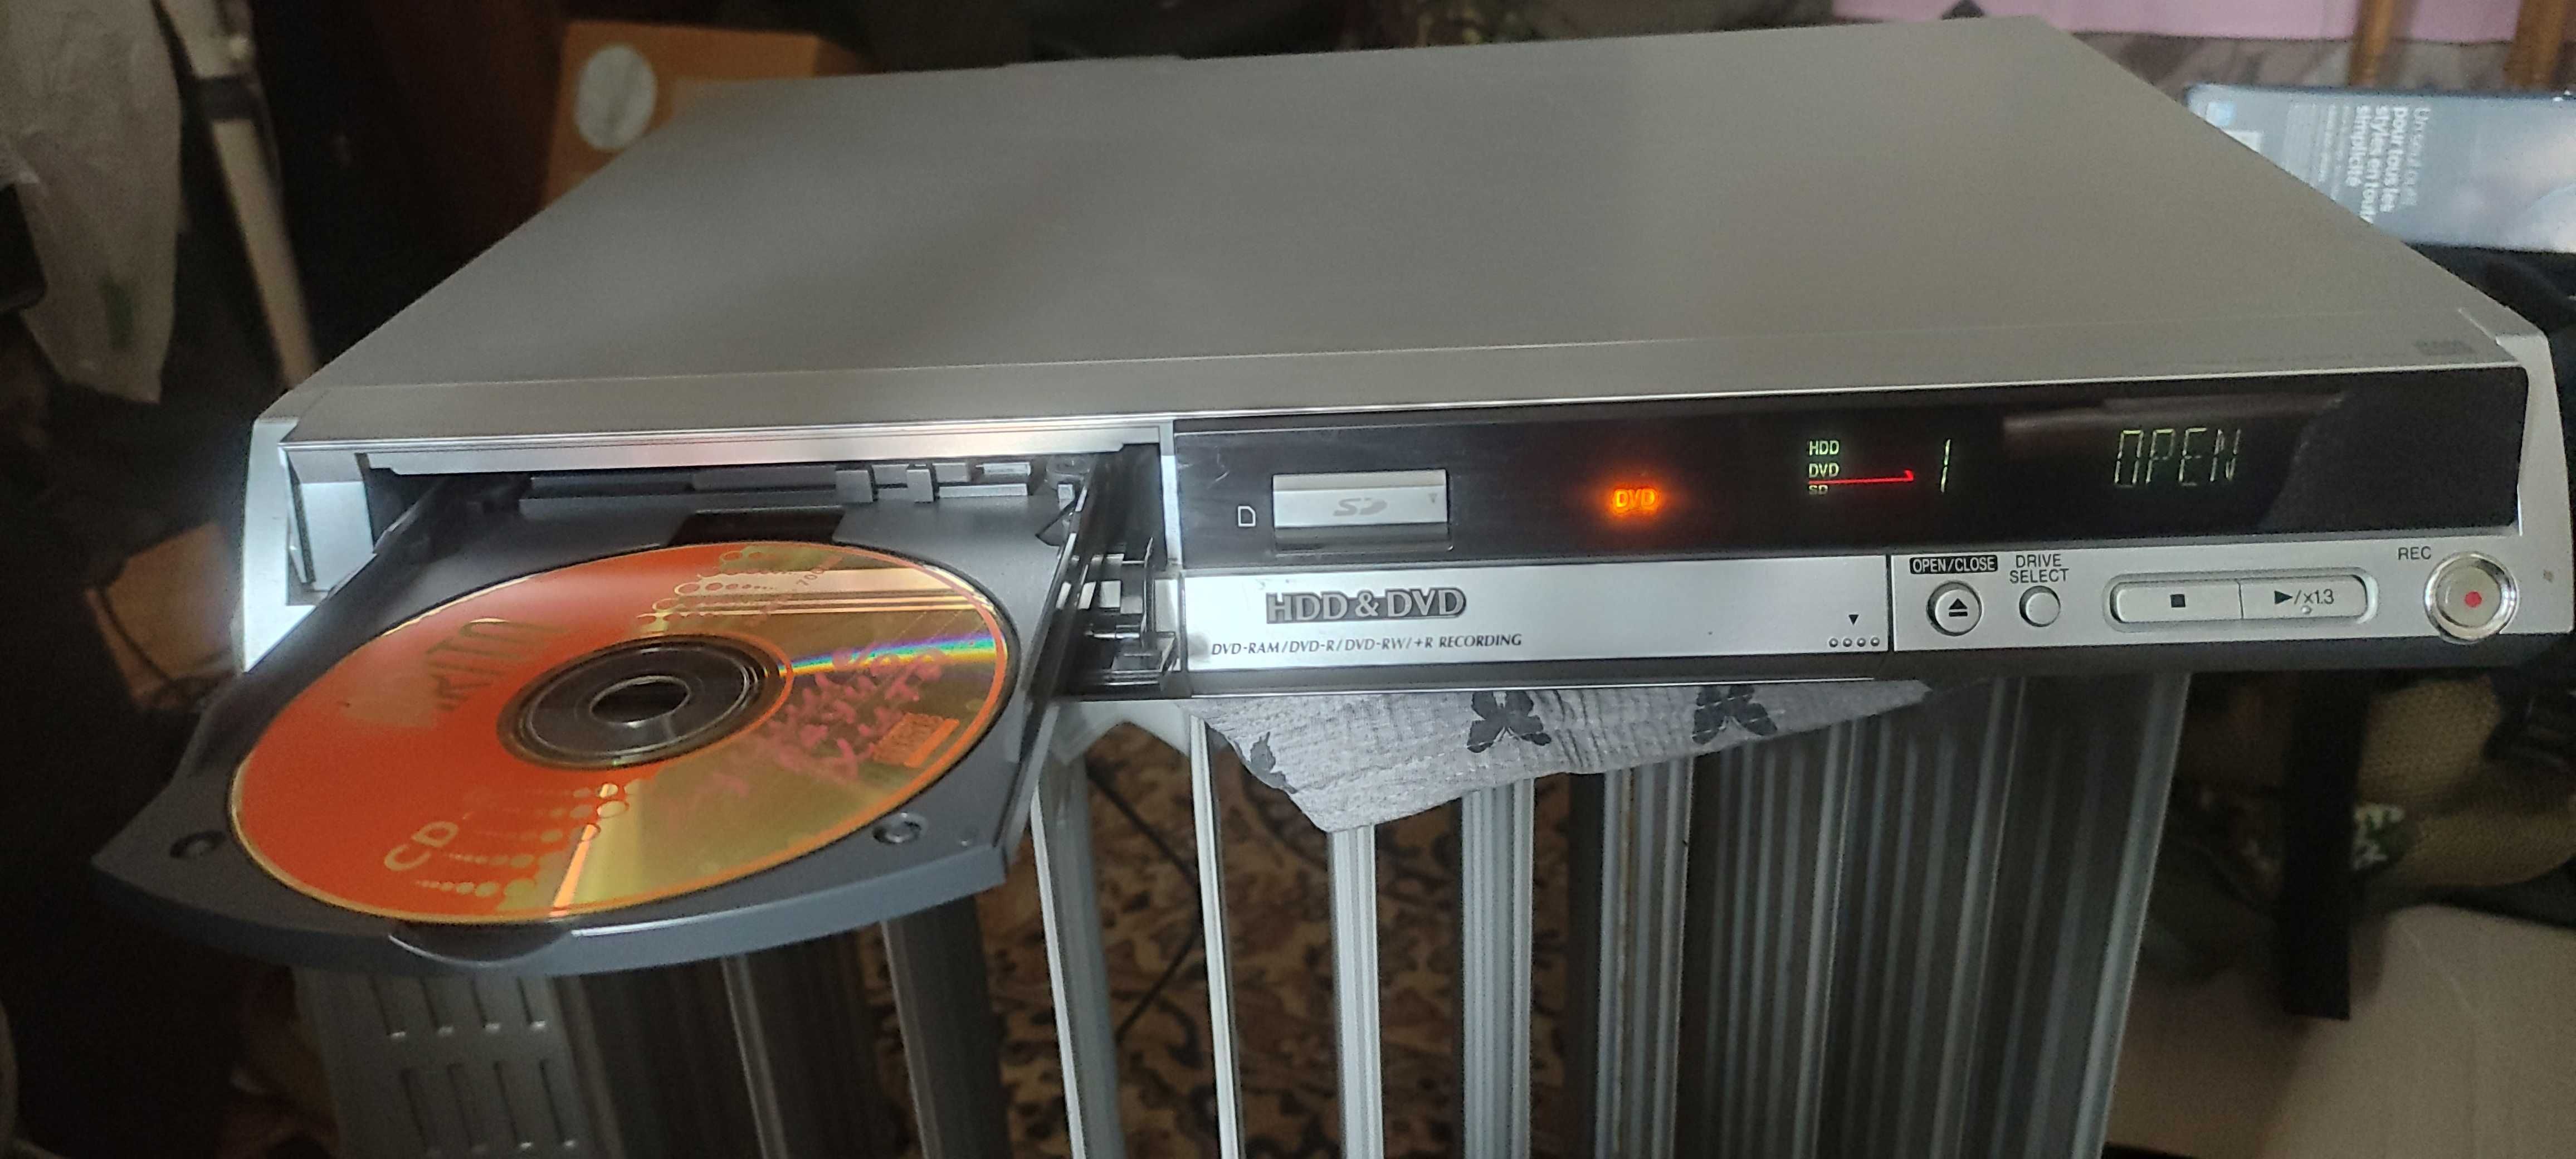 Програвач DVD recorder Panasonic DMR-EN52